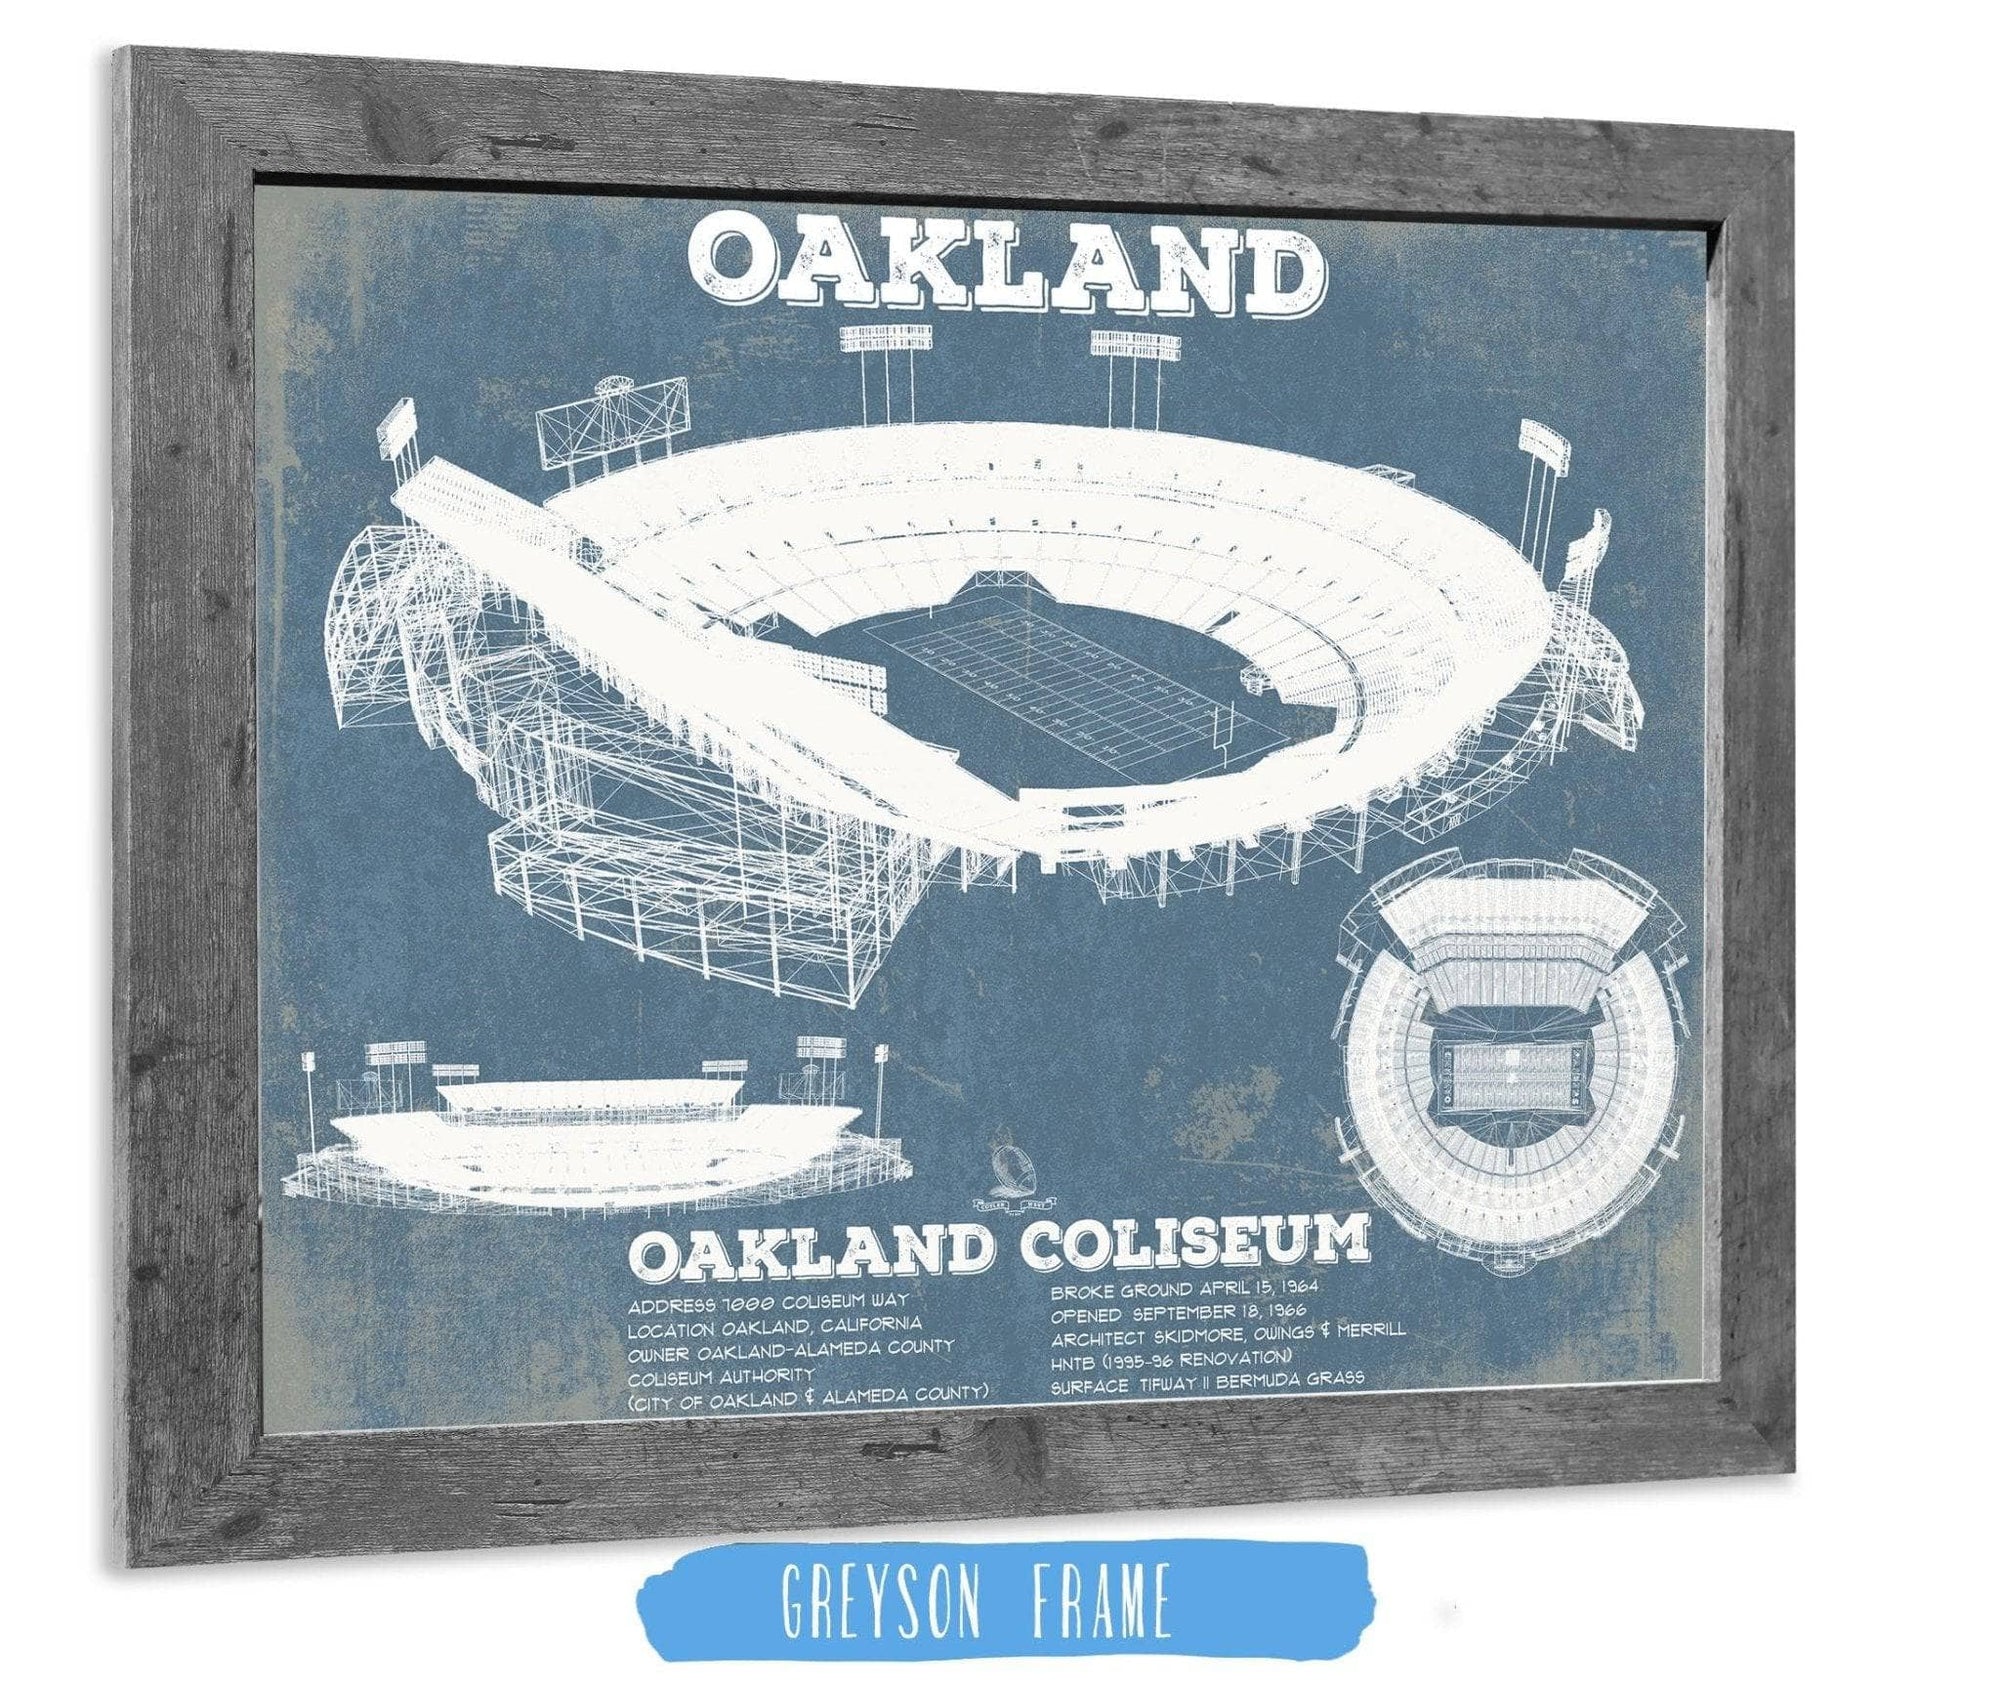 Cutler West Pro Football Collection 14" x 11" / Greyson Frame Oakland Raiders Oakland Coliseum NFL Vintage Football Print 933311317_70566